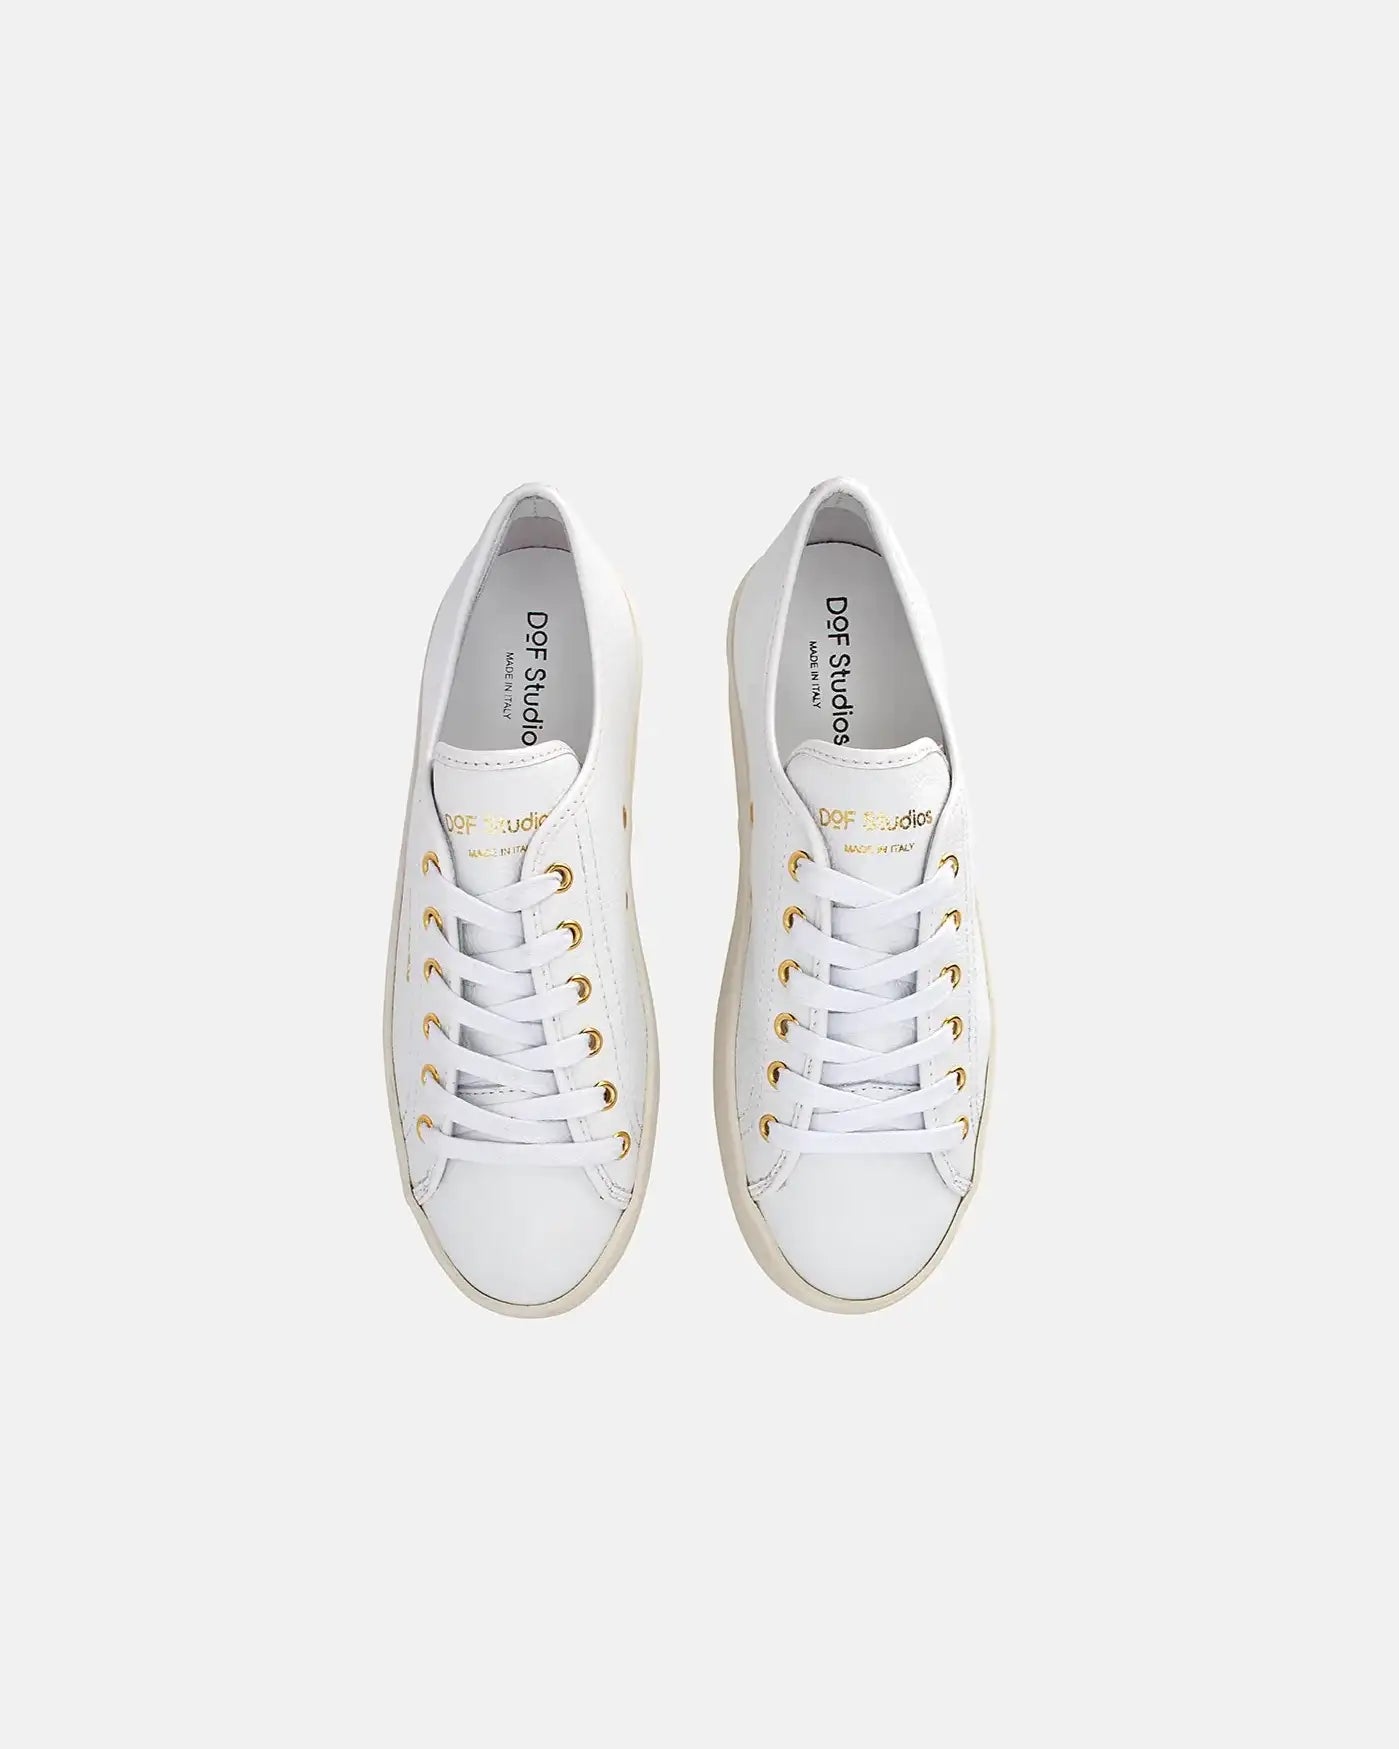 DOF Studios Ariana Platform Sneaker - White